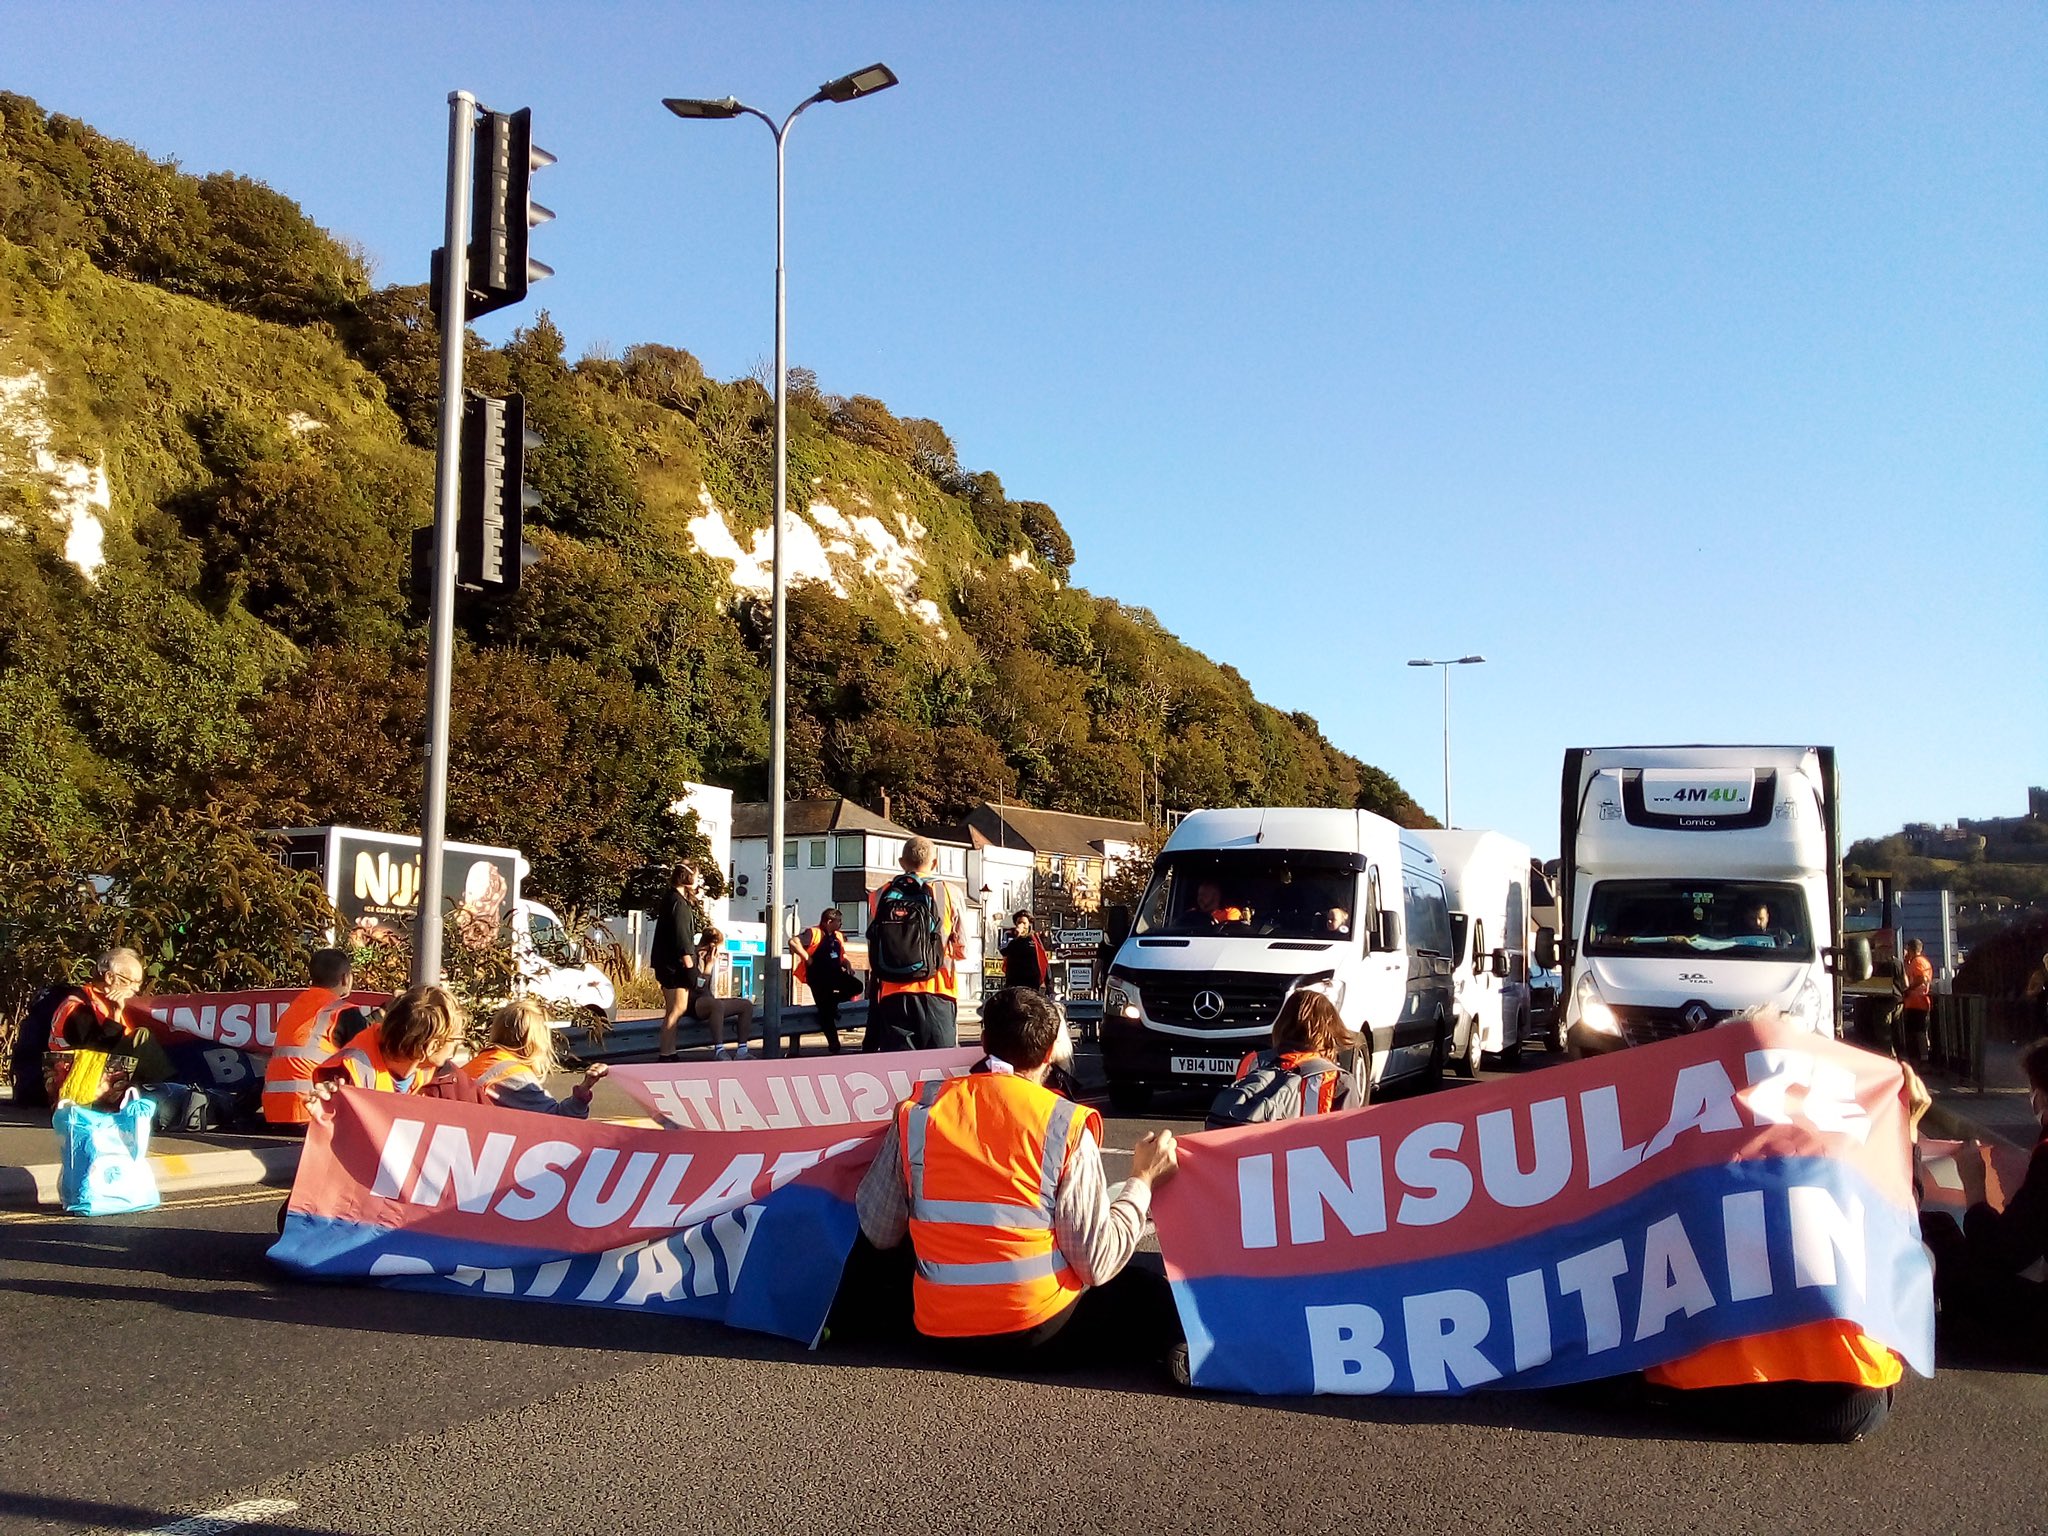 NEWS | Insulate Britain protesters BLOCK Port of Dover